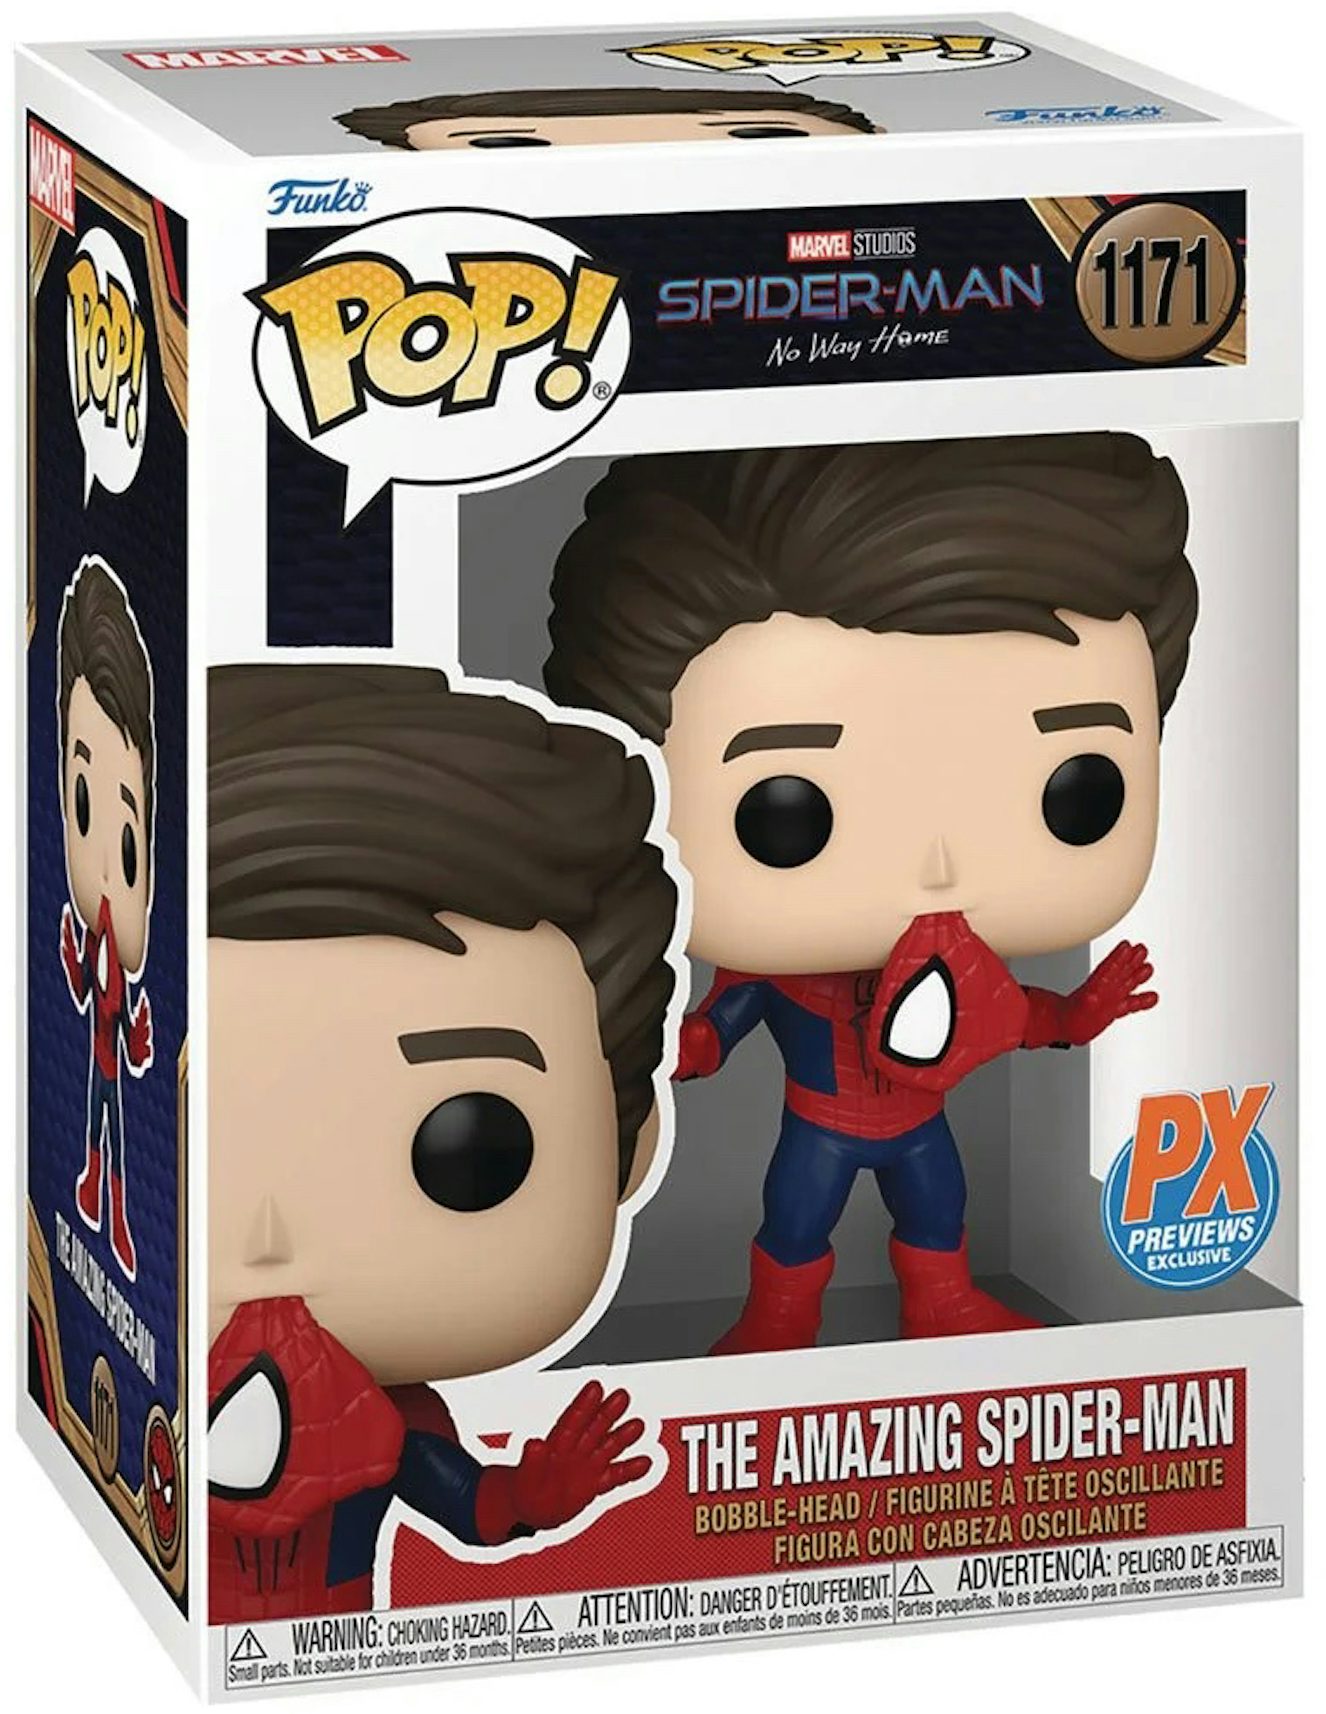 Funko Pop! Marvel Studios Spider-Man No Way Home The Amazing Spider-Man PX  Previews Exclusive Figure #1171 - US